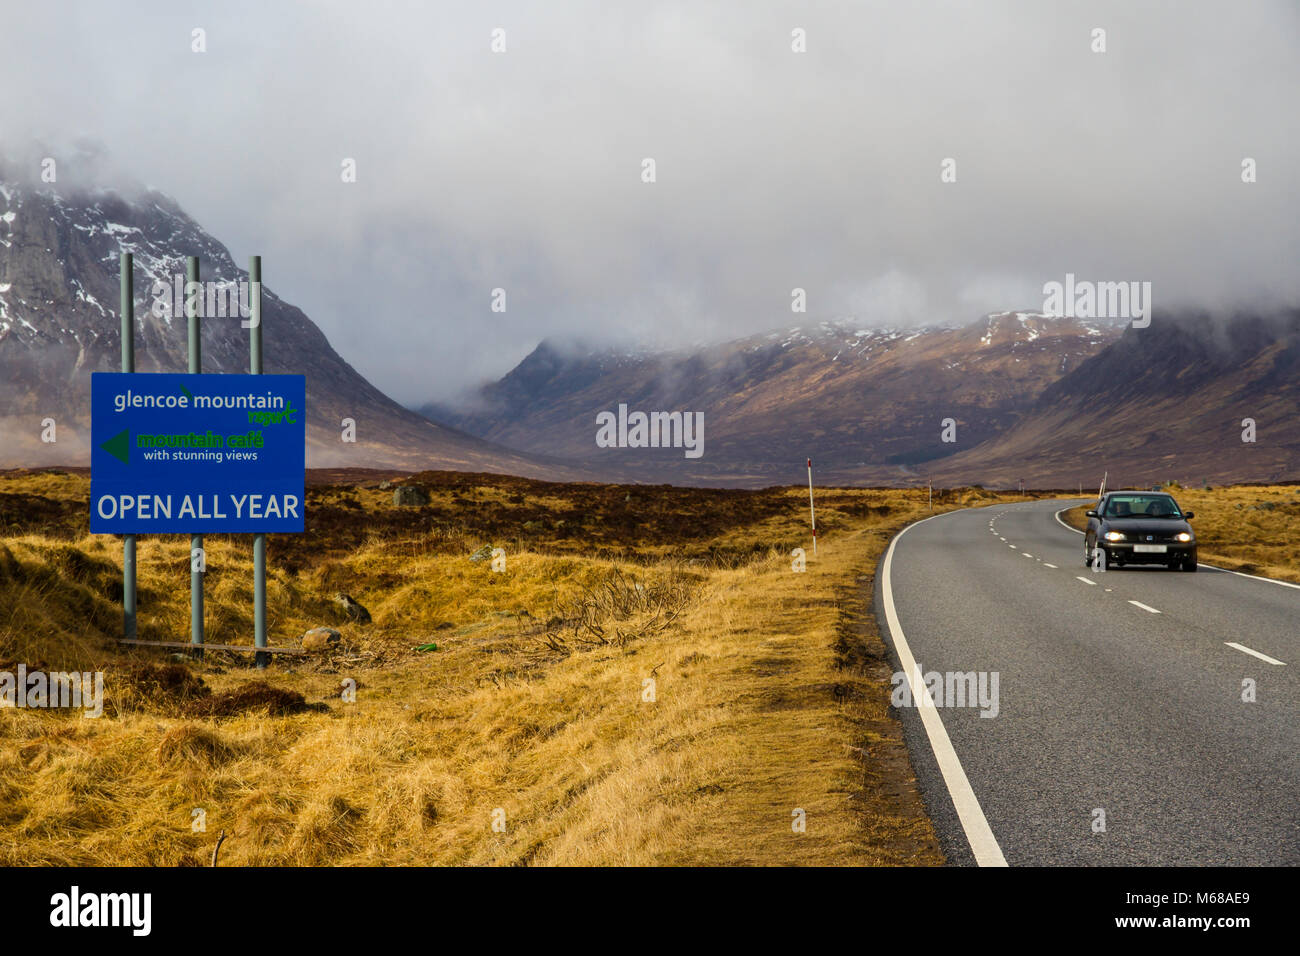 Sign for Glencoe Mountain Resort in Scotland. Stock Photo